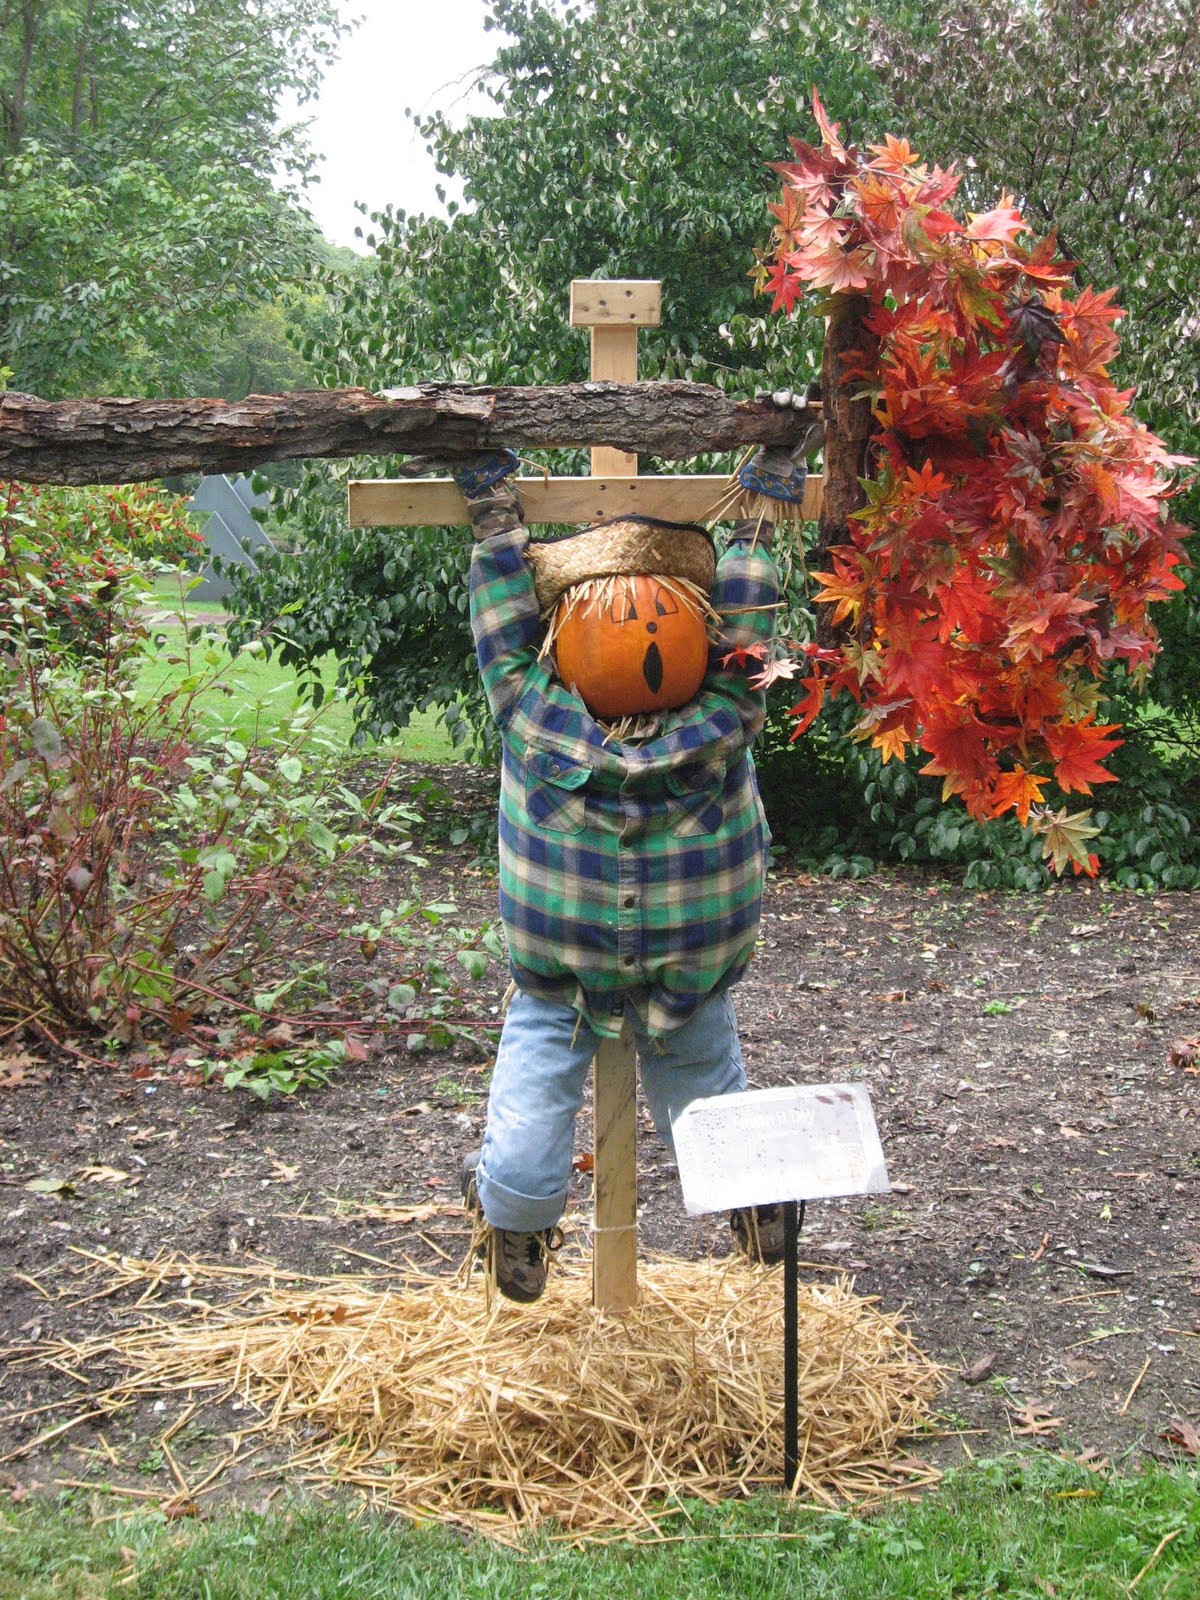 Morris Arboretum: It is time for the annual Scarecrow Design Contest at ...